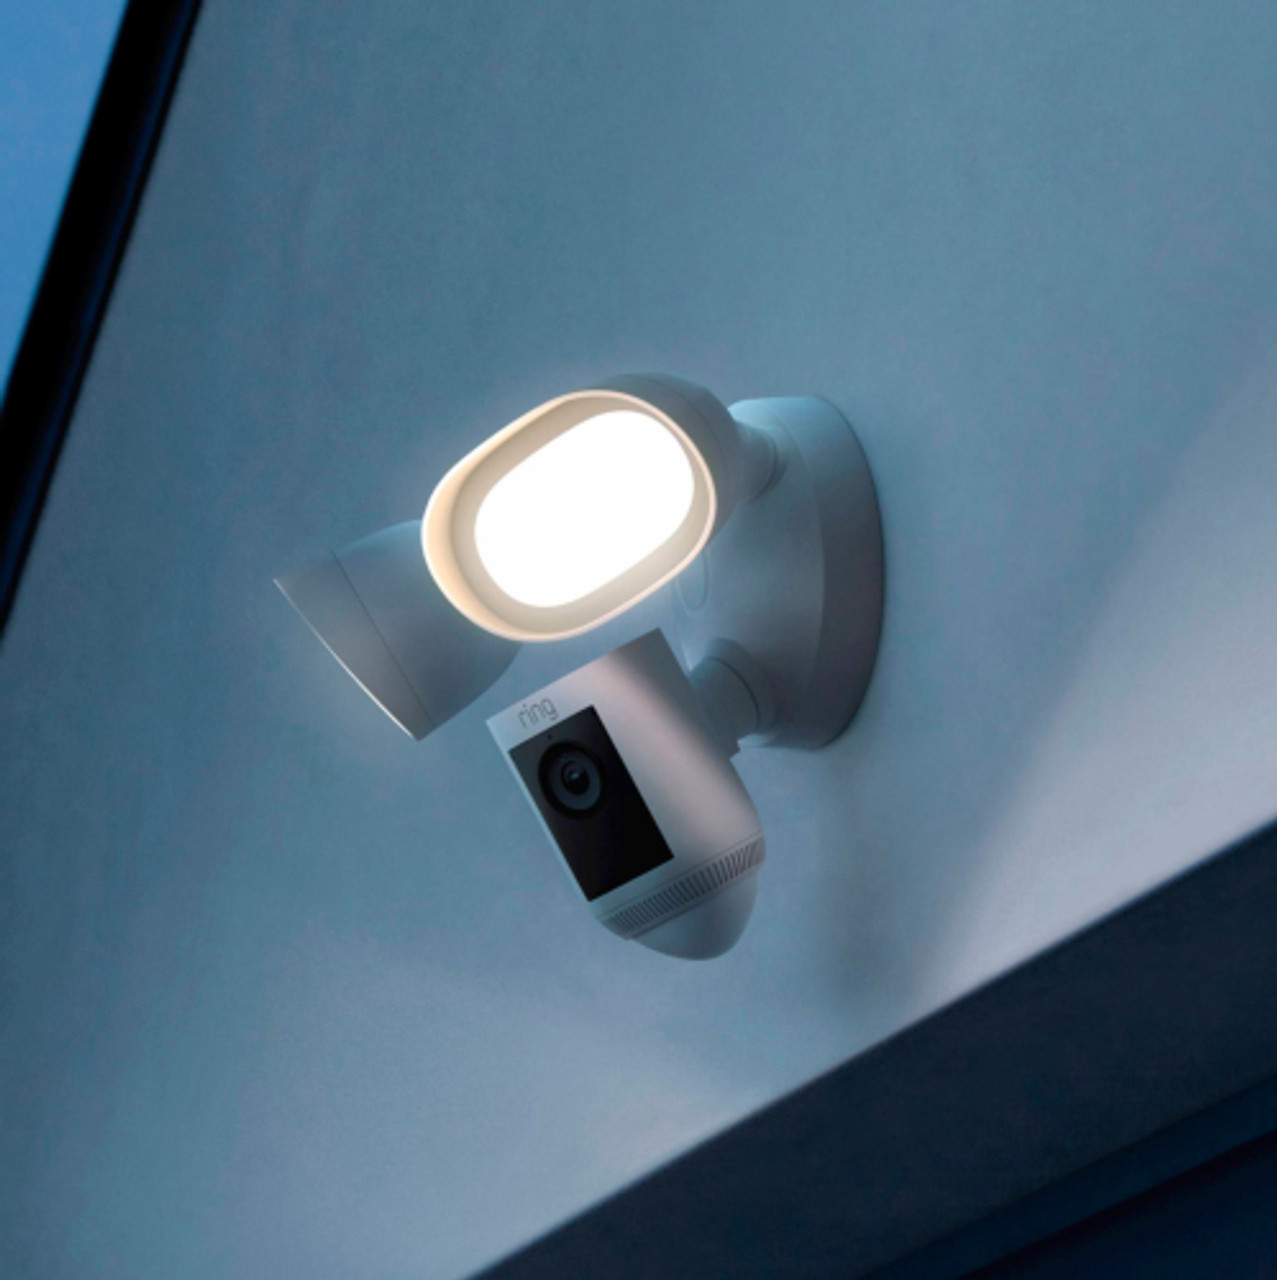 Ring - Floodlight Cam Pro Outdoor Wireless 1080p Surveillance Camera - White